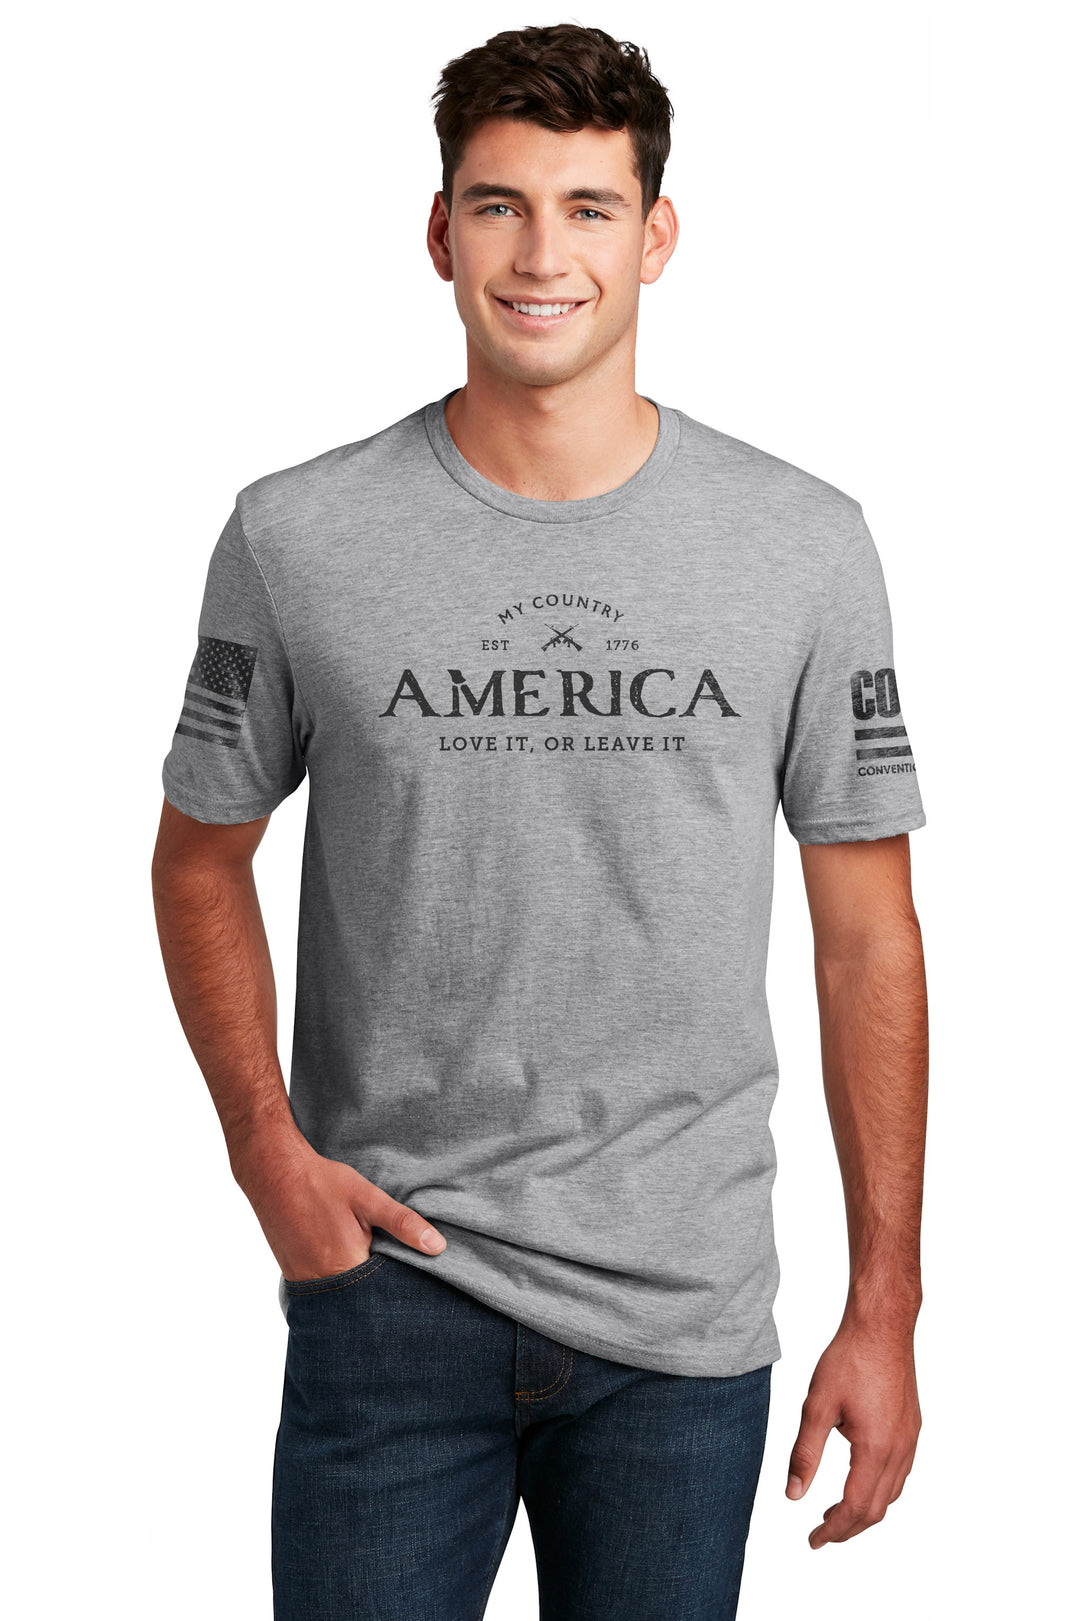 America-Love It or Leave It Unisex Tee